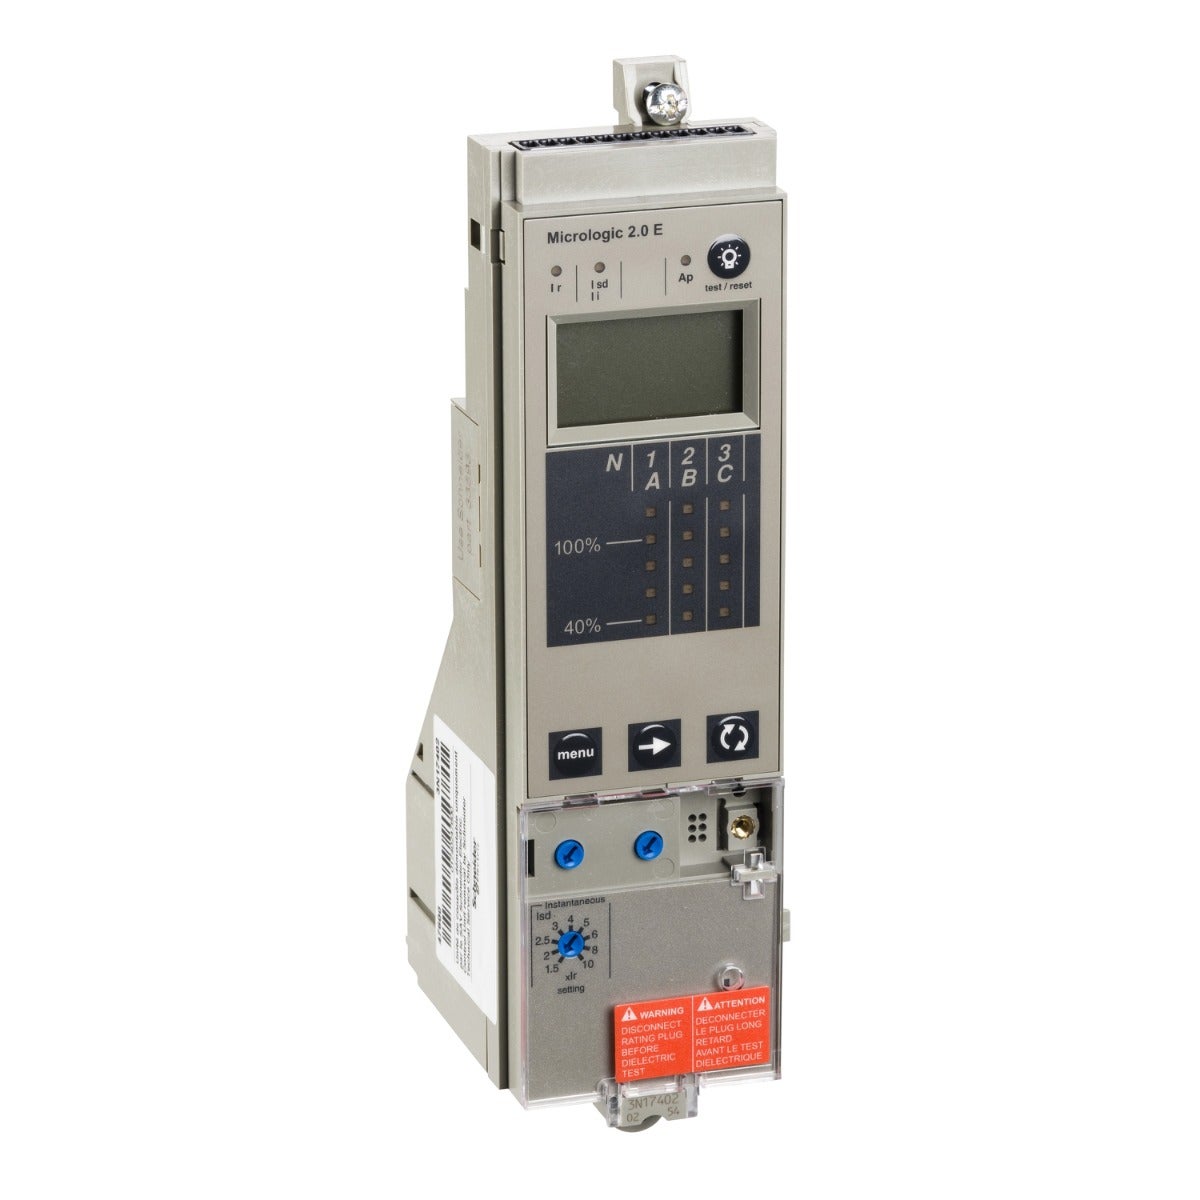 control unit Micrologic 2.0 E, basic protections LI, energy meter measurement (Pre-Order 45 days)